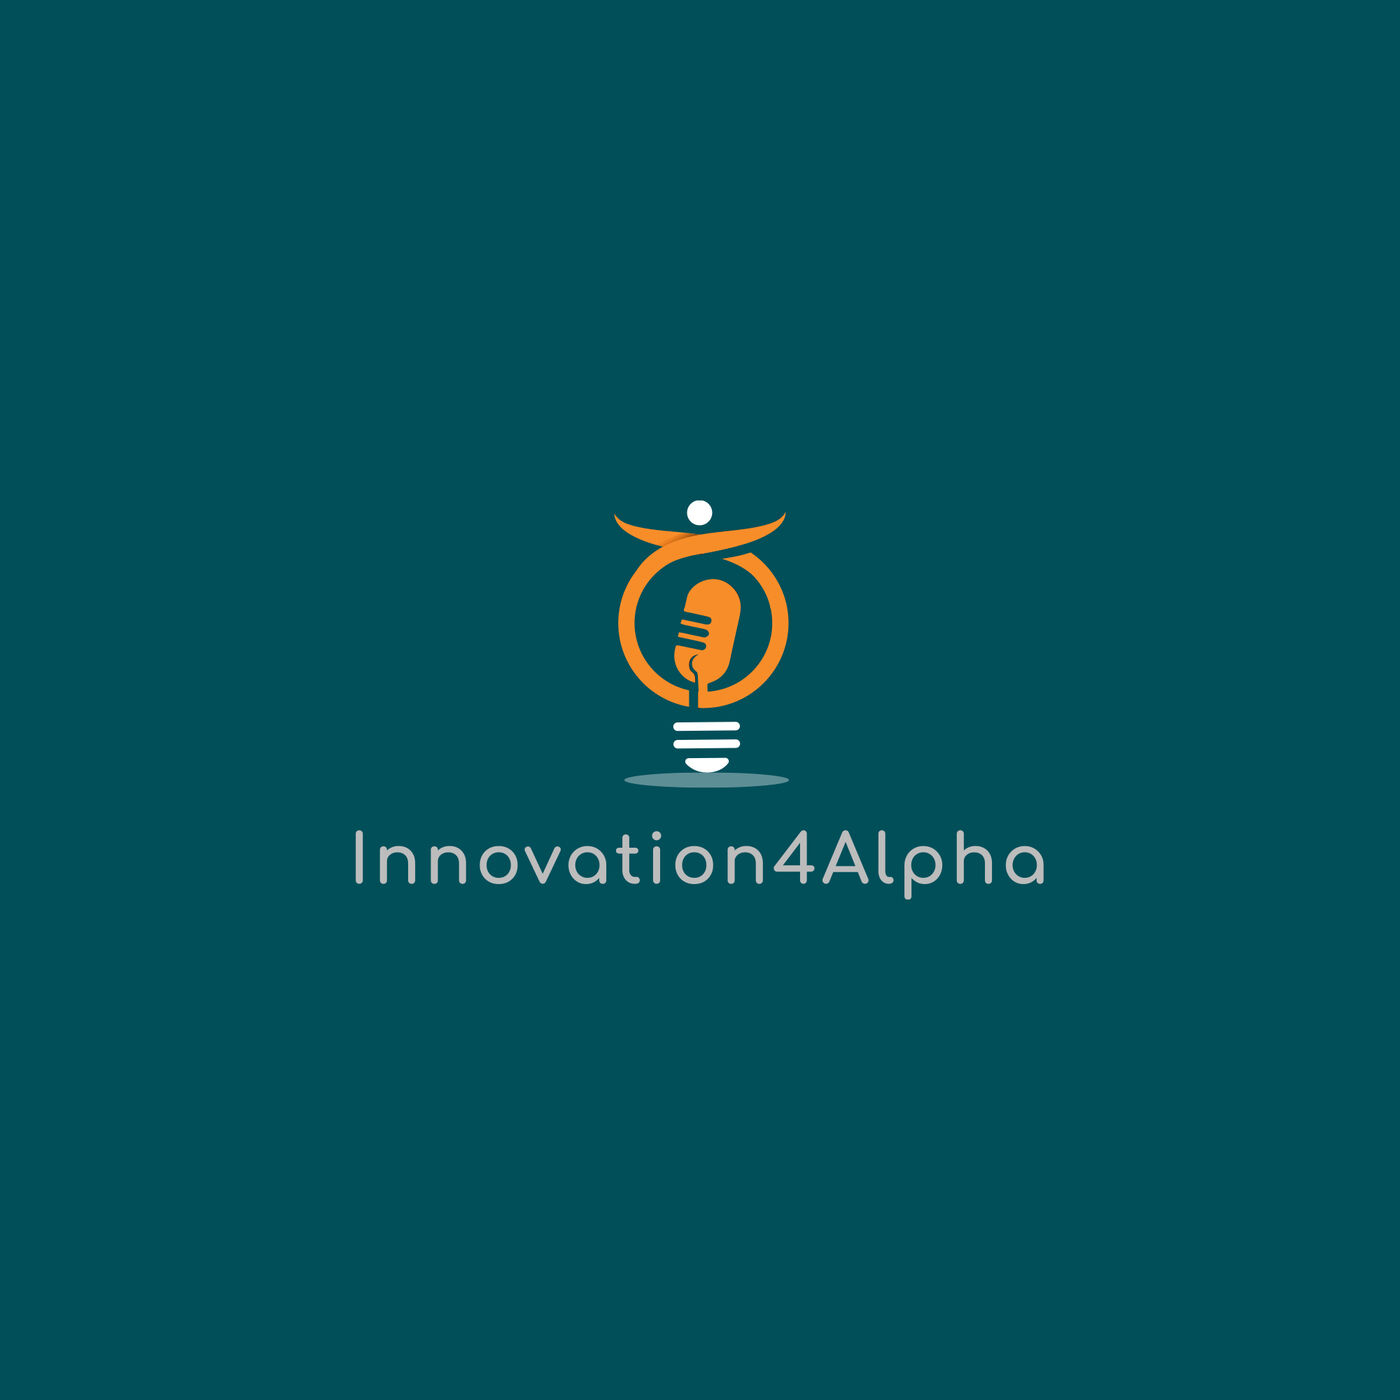 Introducing Yuri Sernande - technologist, Innovator & Innovation4Alpha Executive Producer